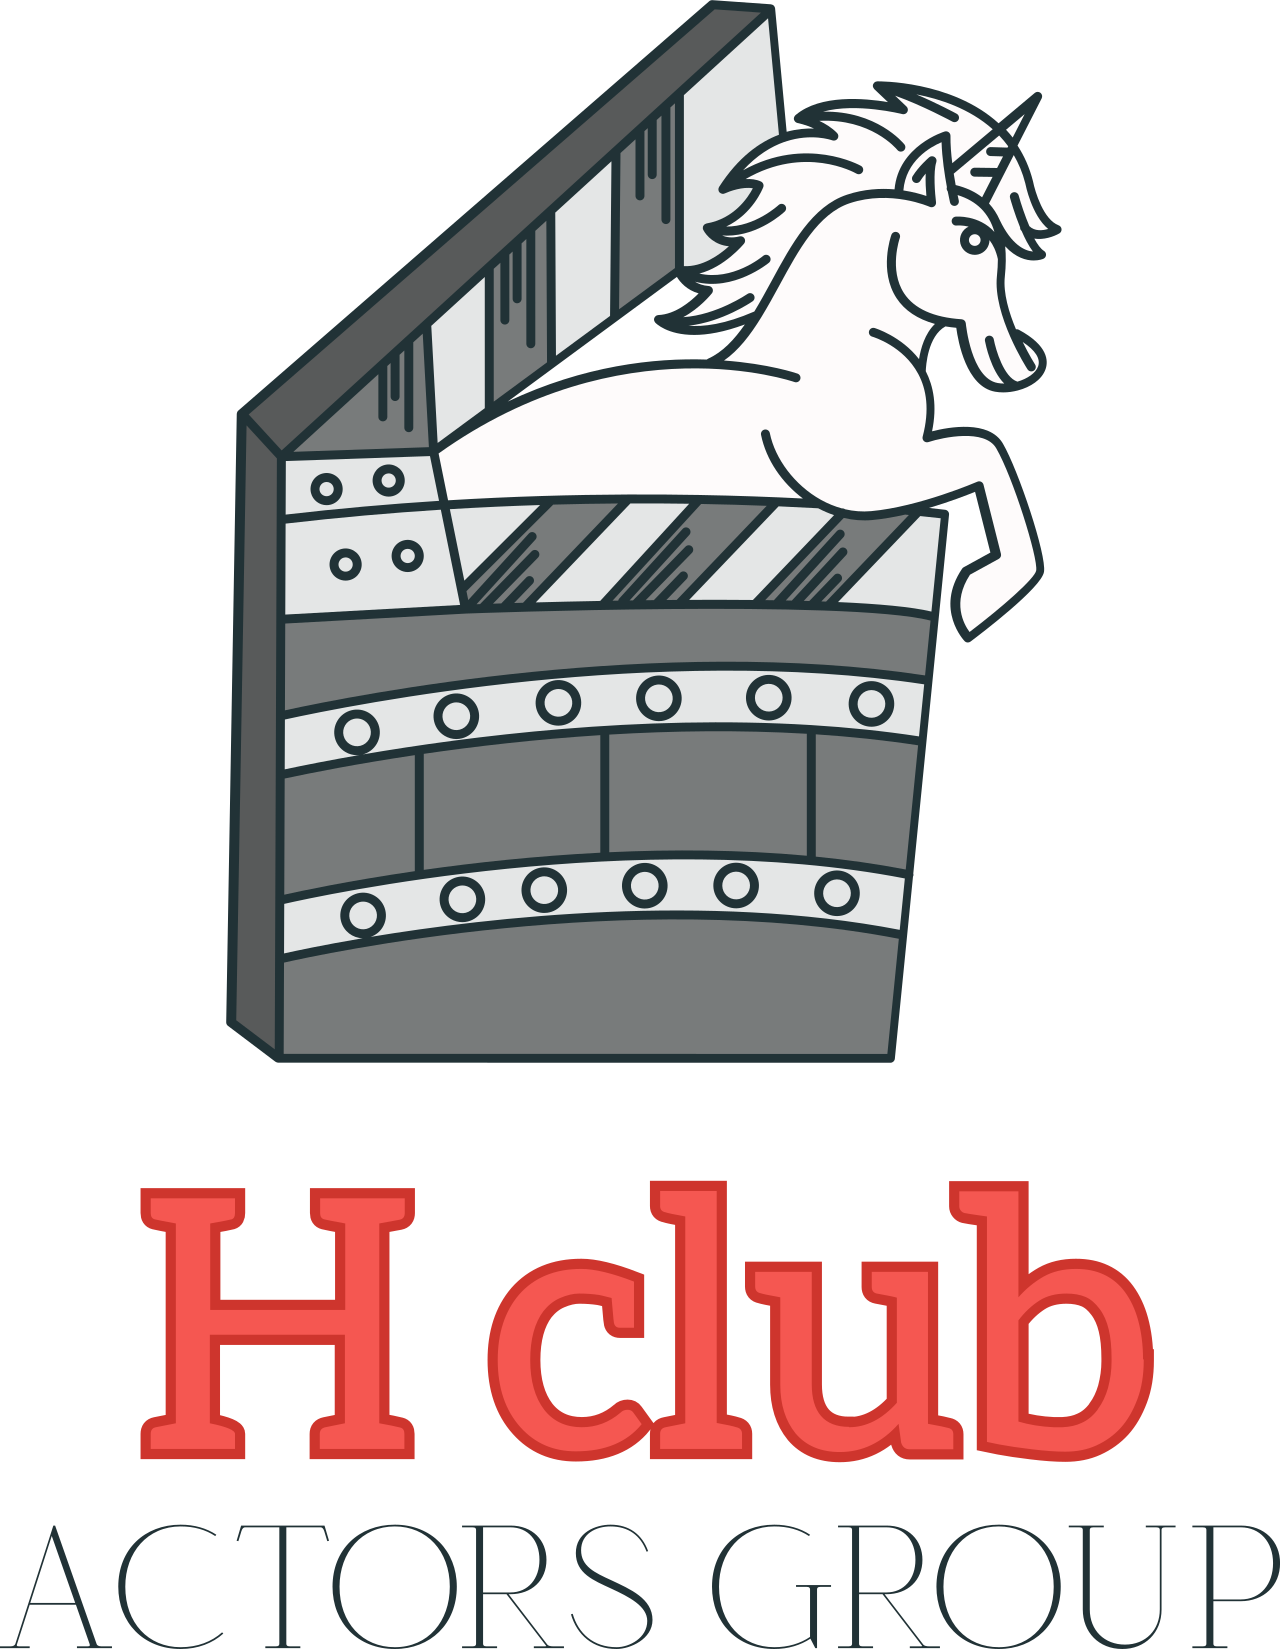 H club's logo